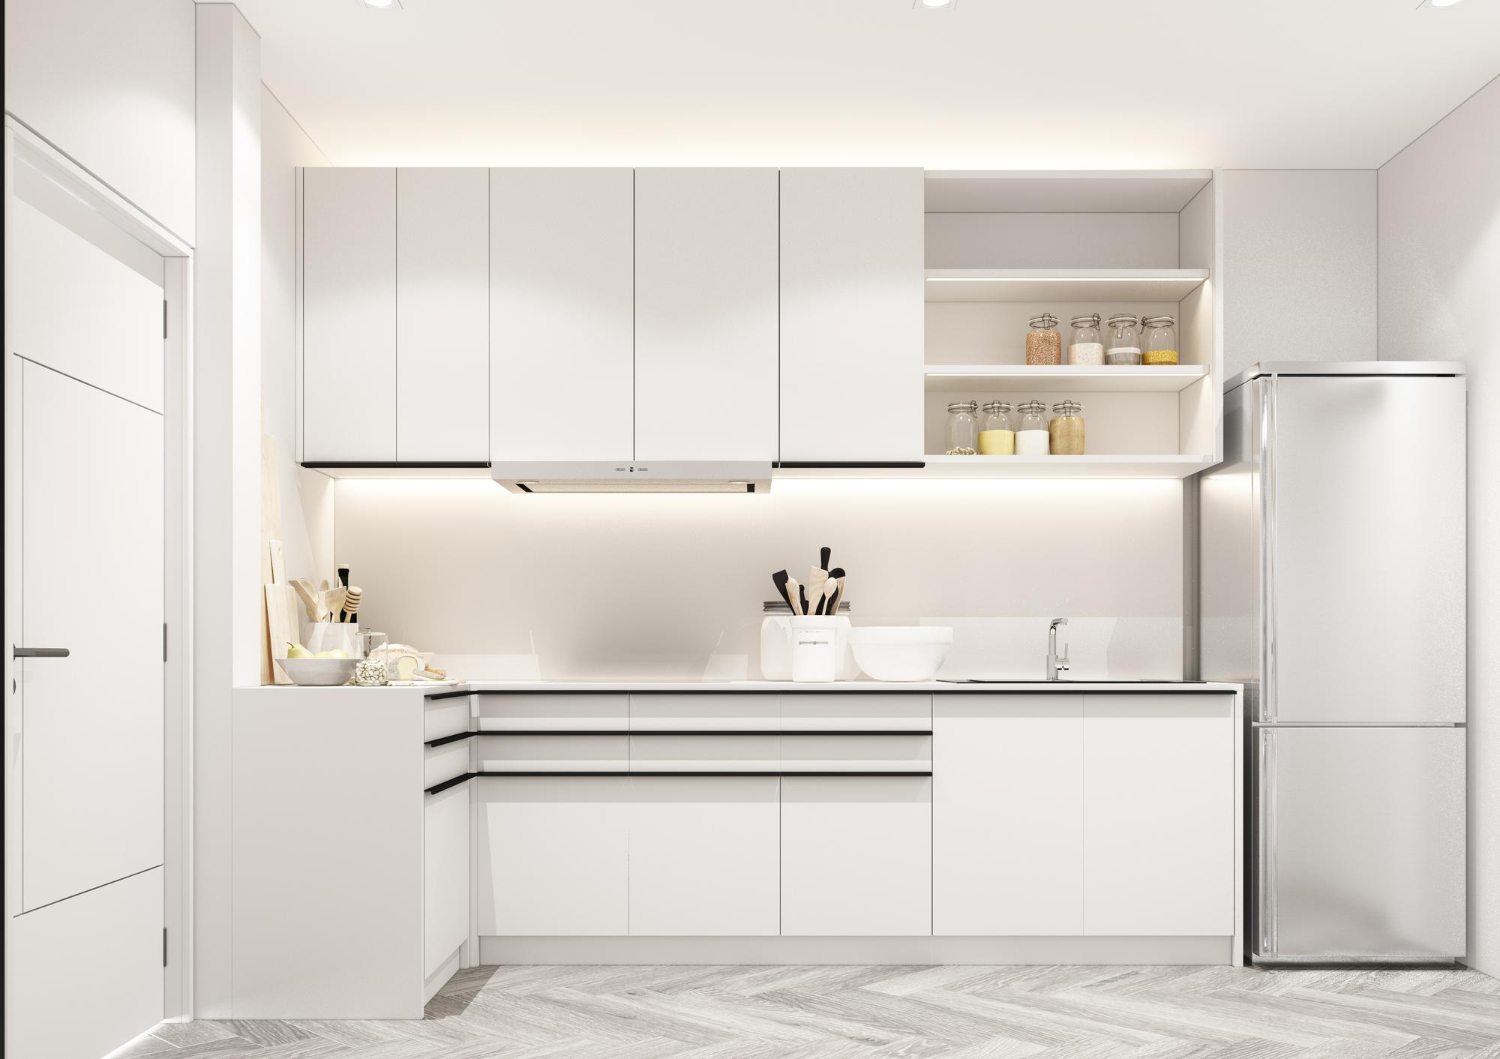 Optimalkan ruangan dapur yang terbatas dengan plafon minimalis dan ruangan yang didominasi warna putih.